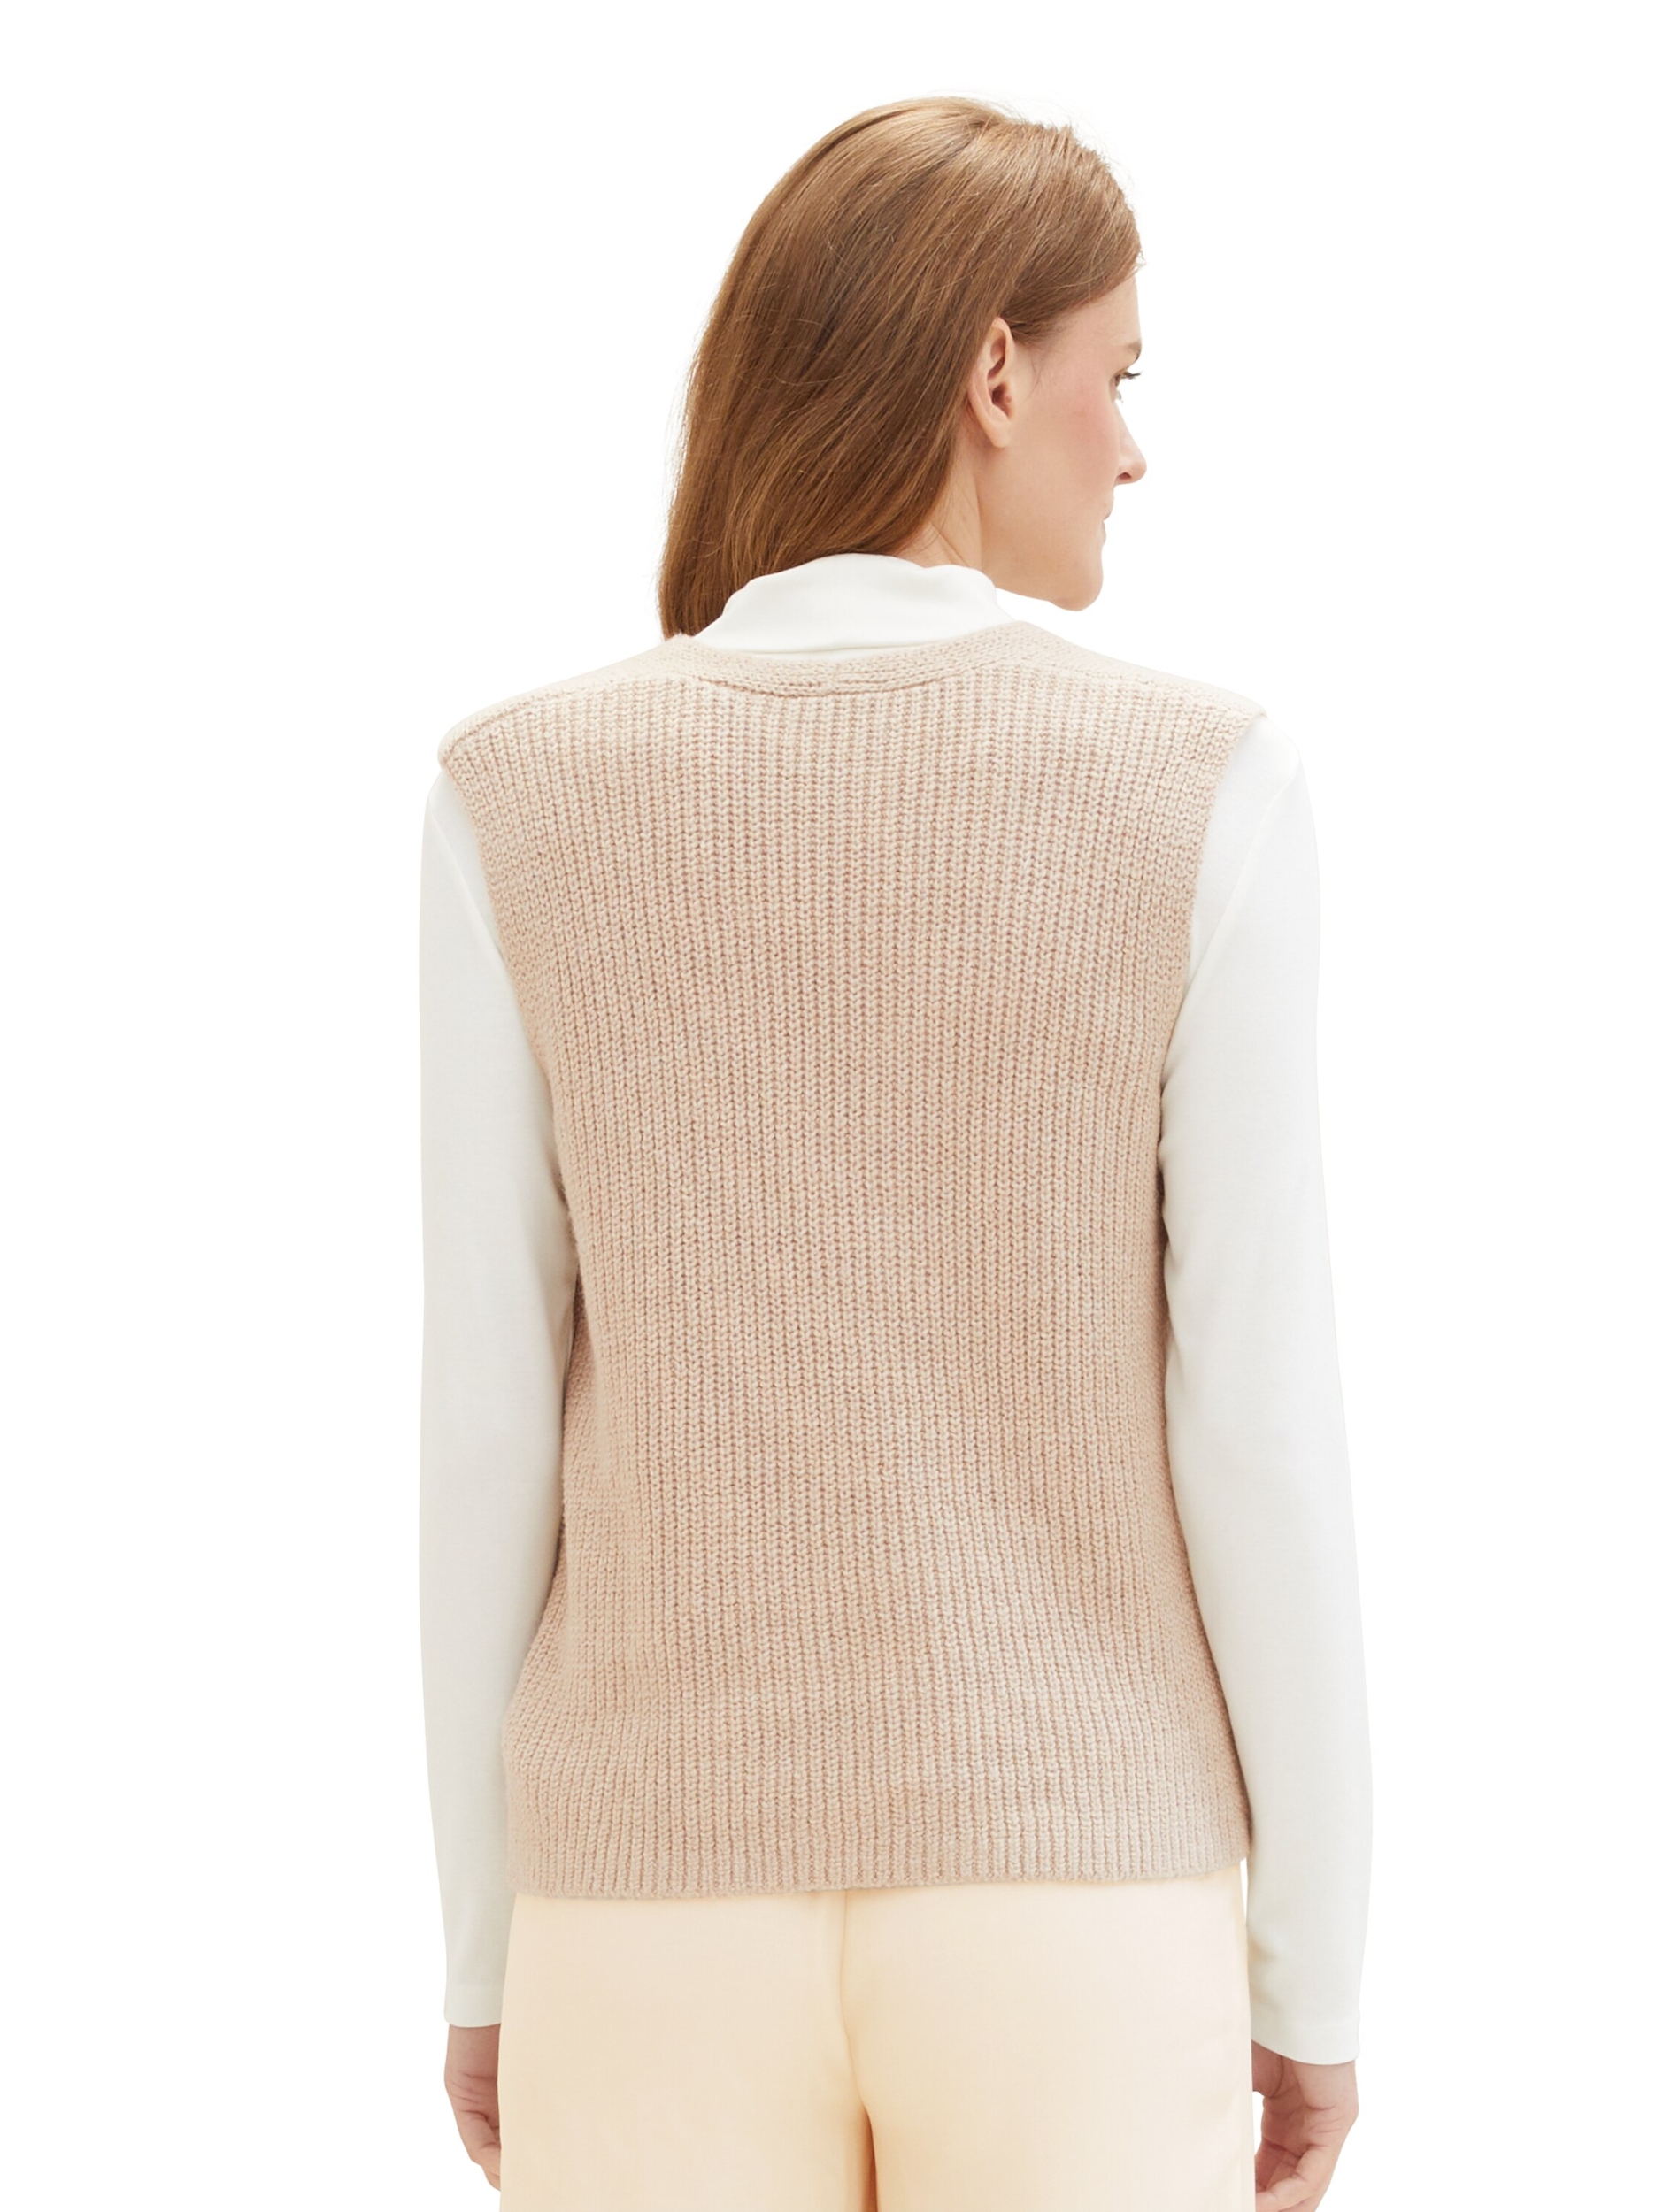 Knit half cardigan vest